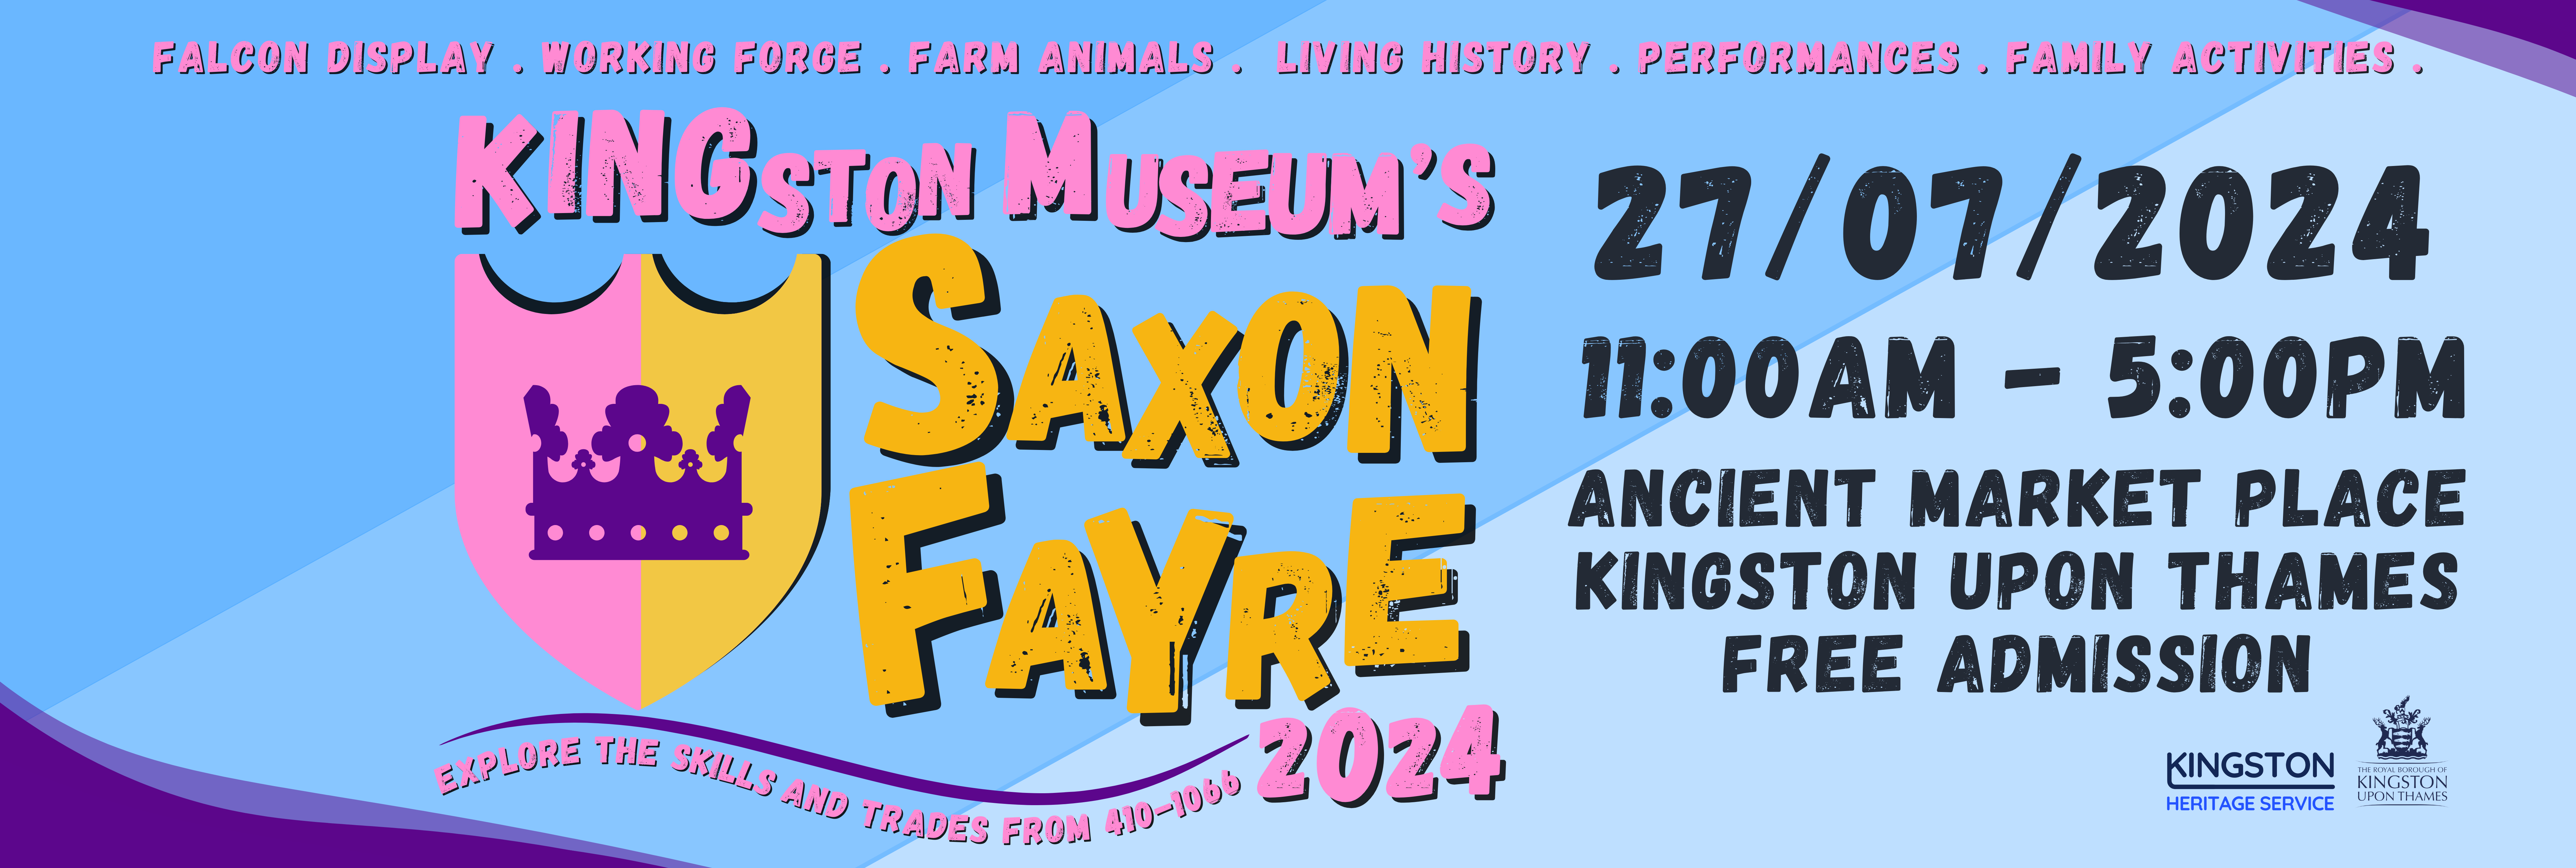 Kingston museum s saxon fayre 2024 banner